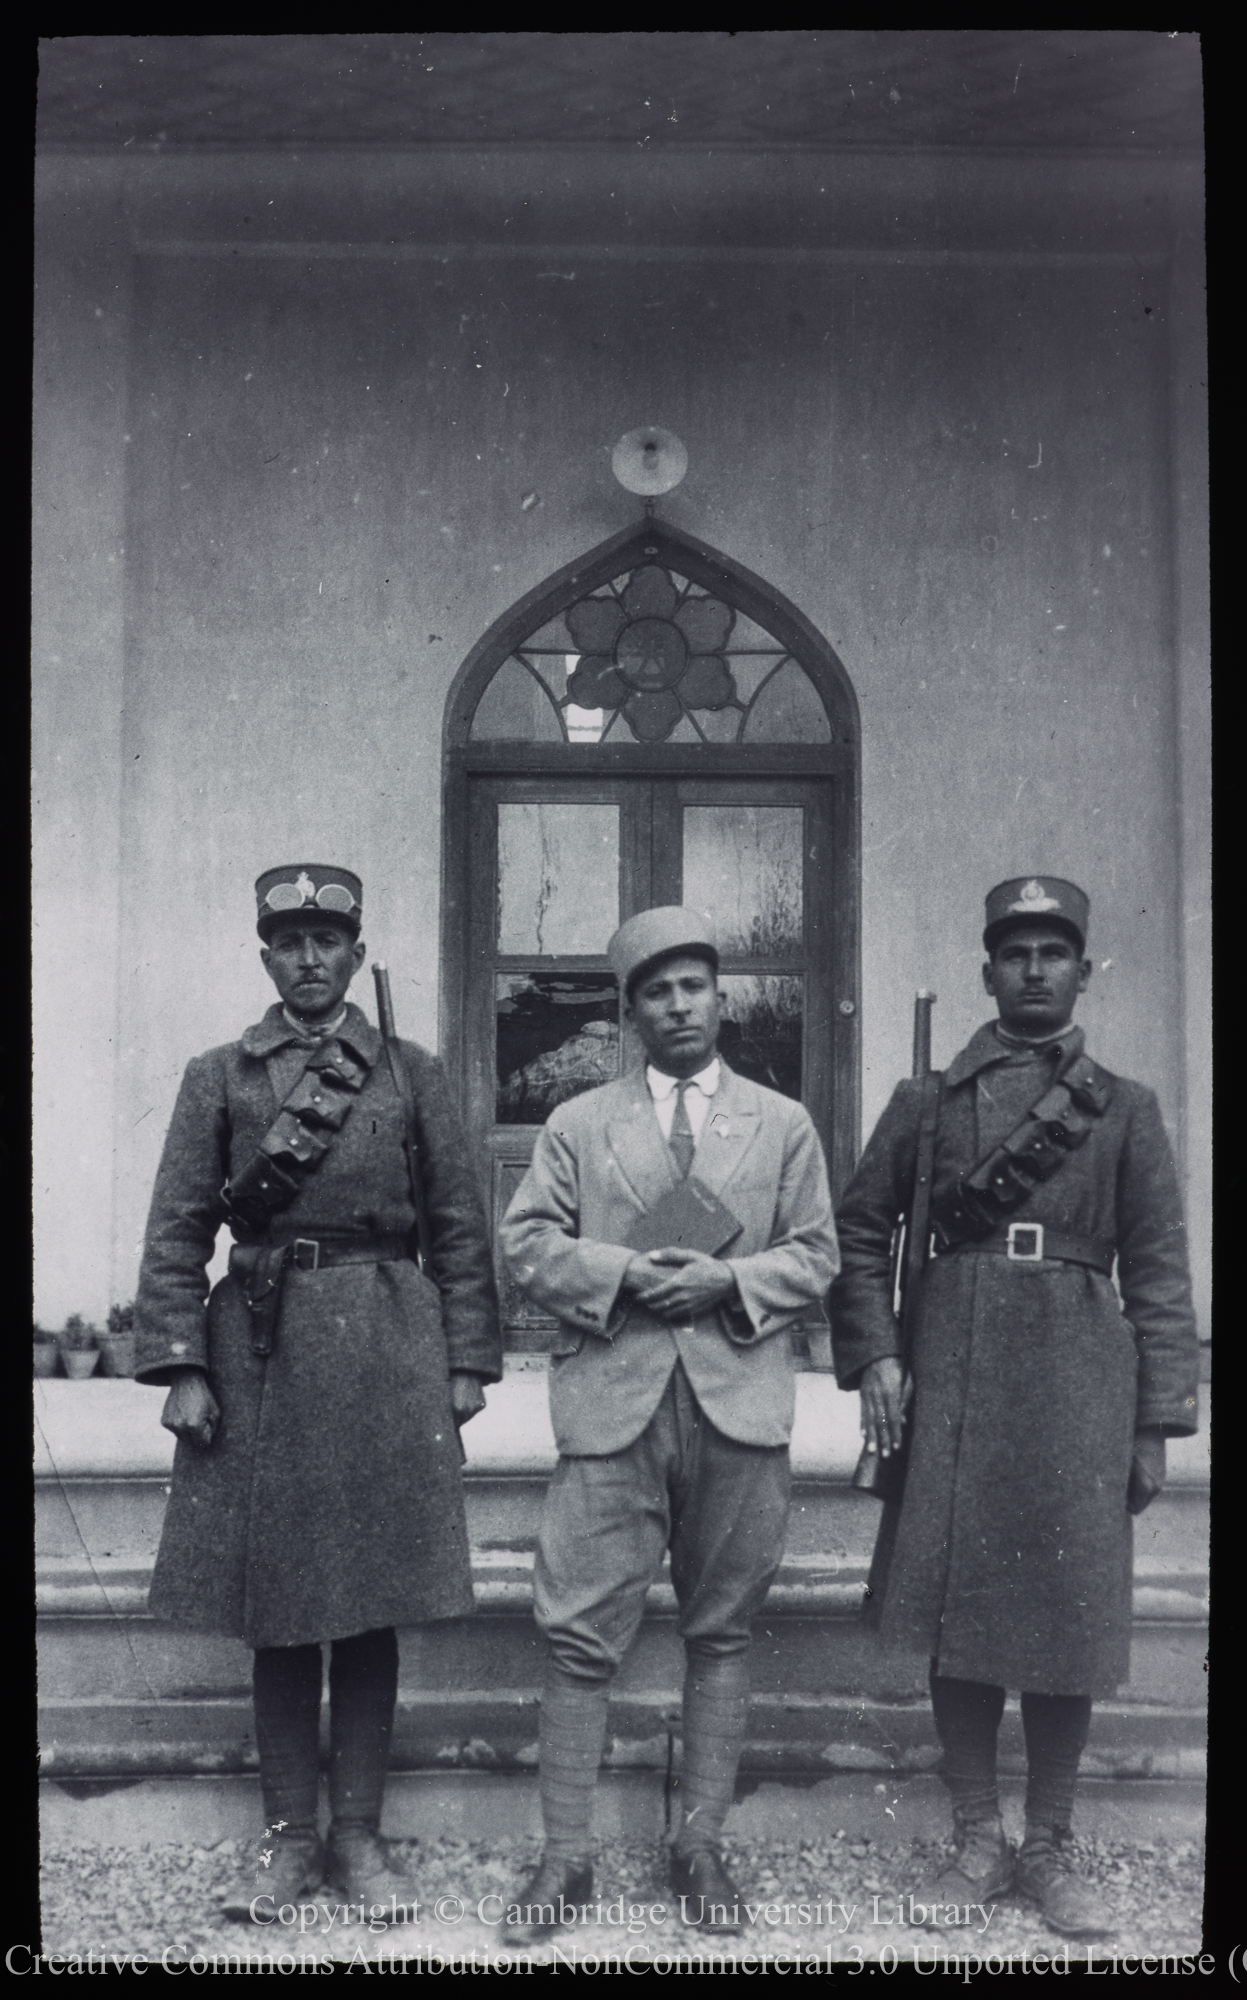 Dr. Mani and his guard, 1928 - 1935